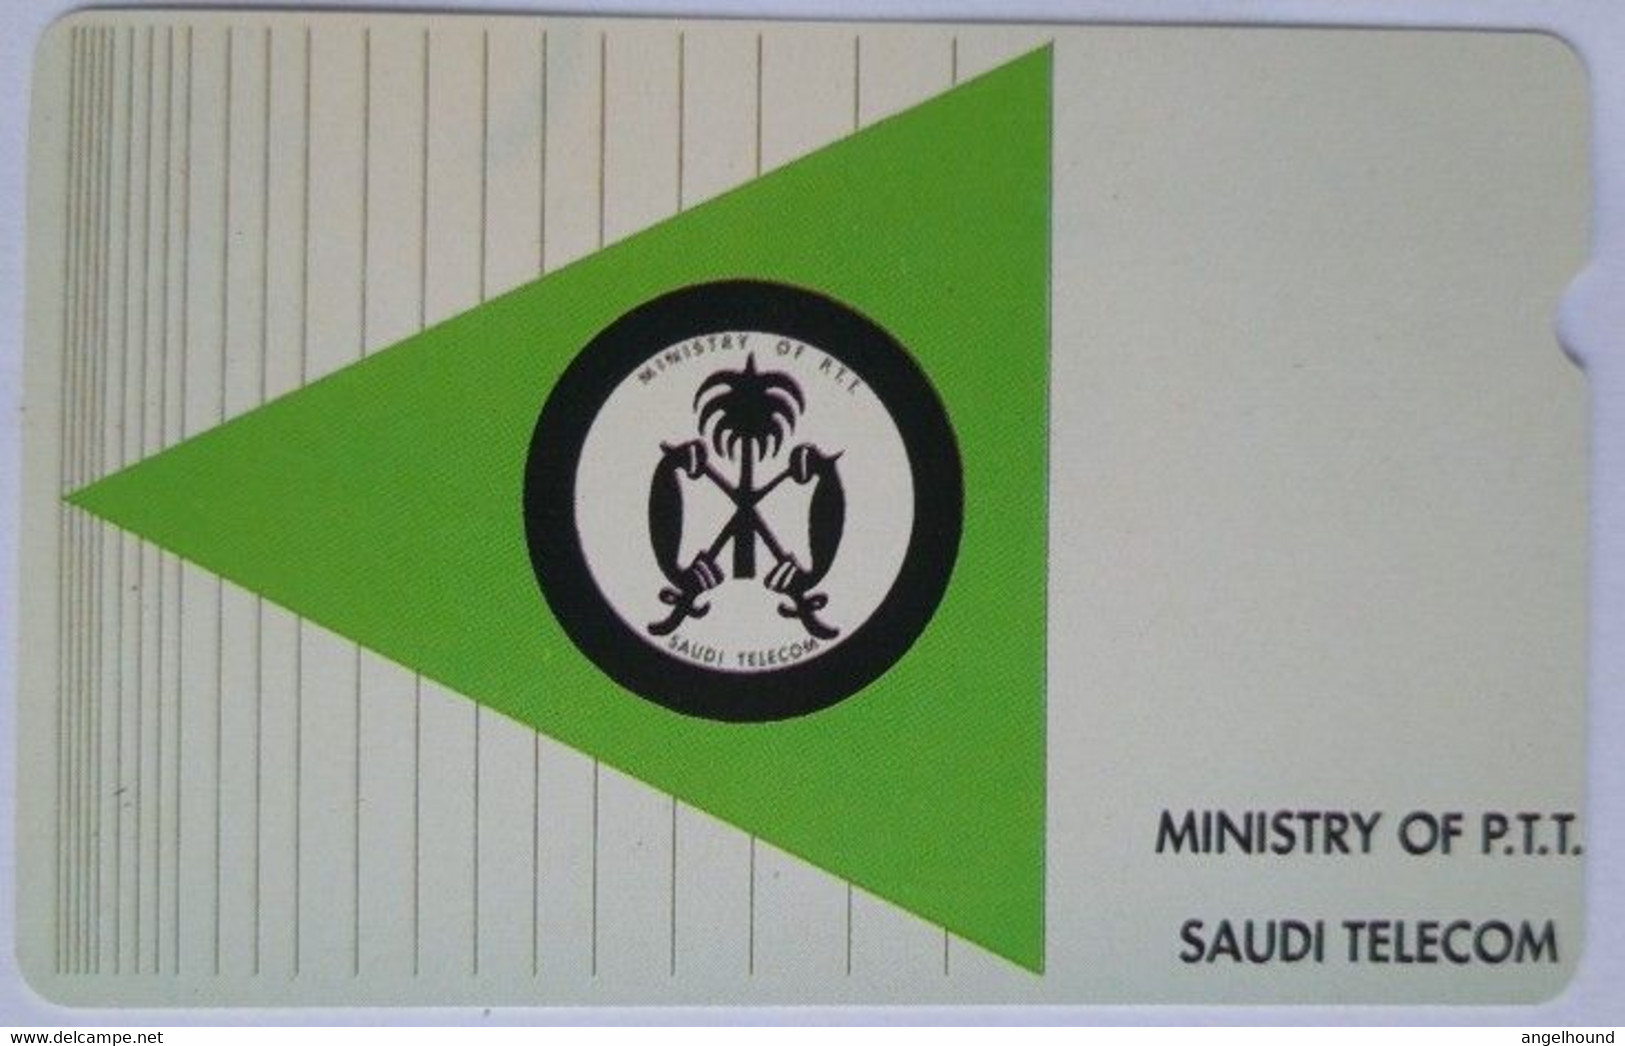 Saudi Telecom Ministry Of P.T.T. "A" A Value Logo In Green Triangle " - Saudi-Arabien